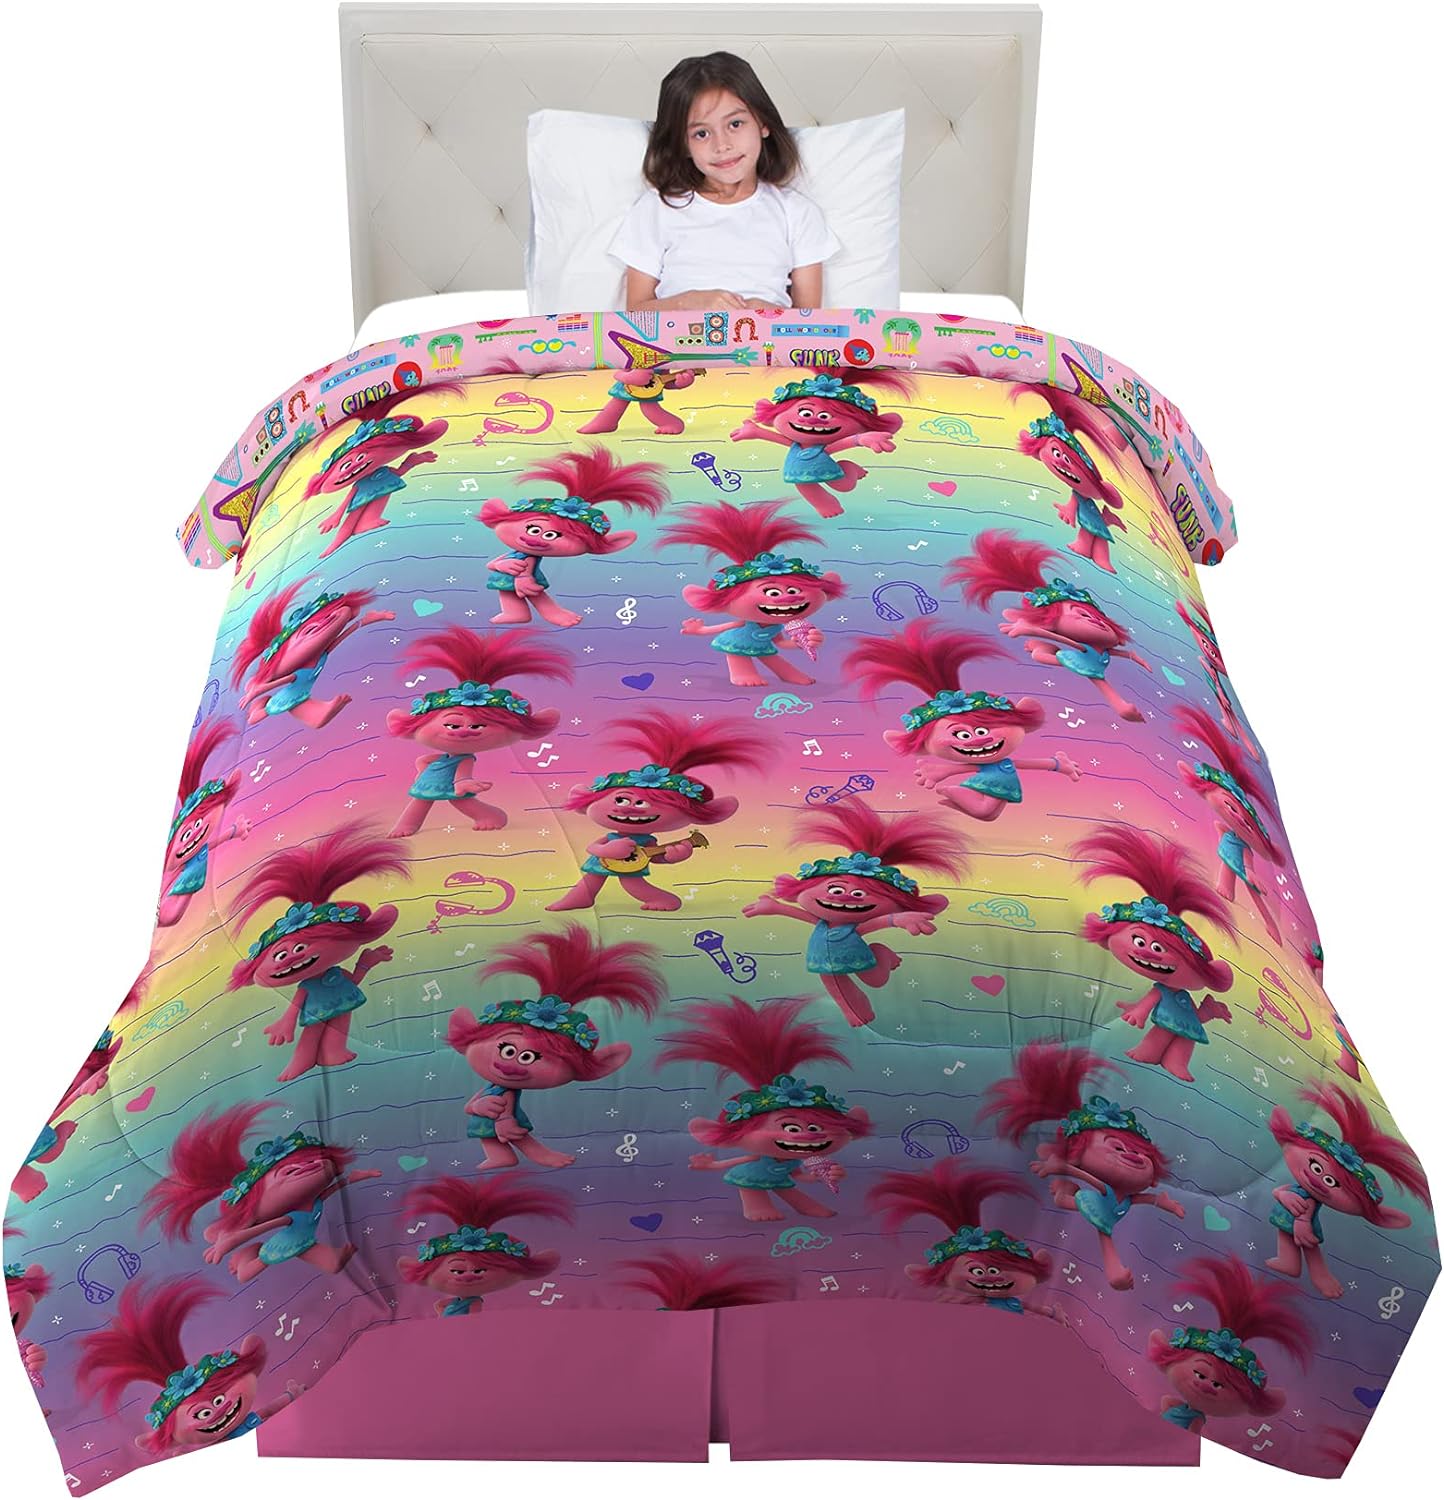 NEW Franco Kids Bedding Soft Microfiber Comforter, Twin, Trolls World Tour - Retail $51